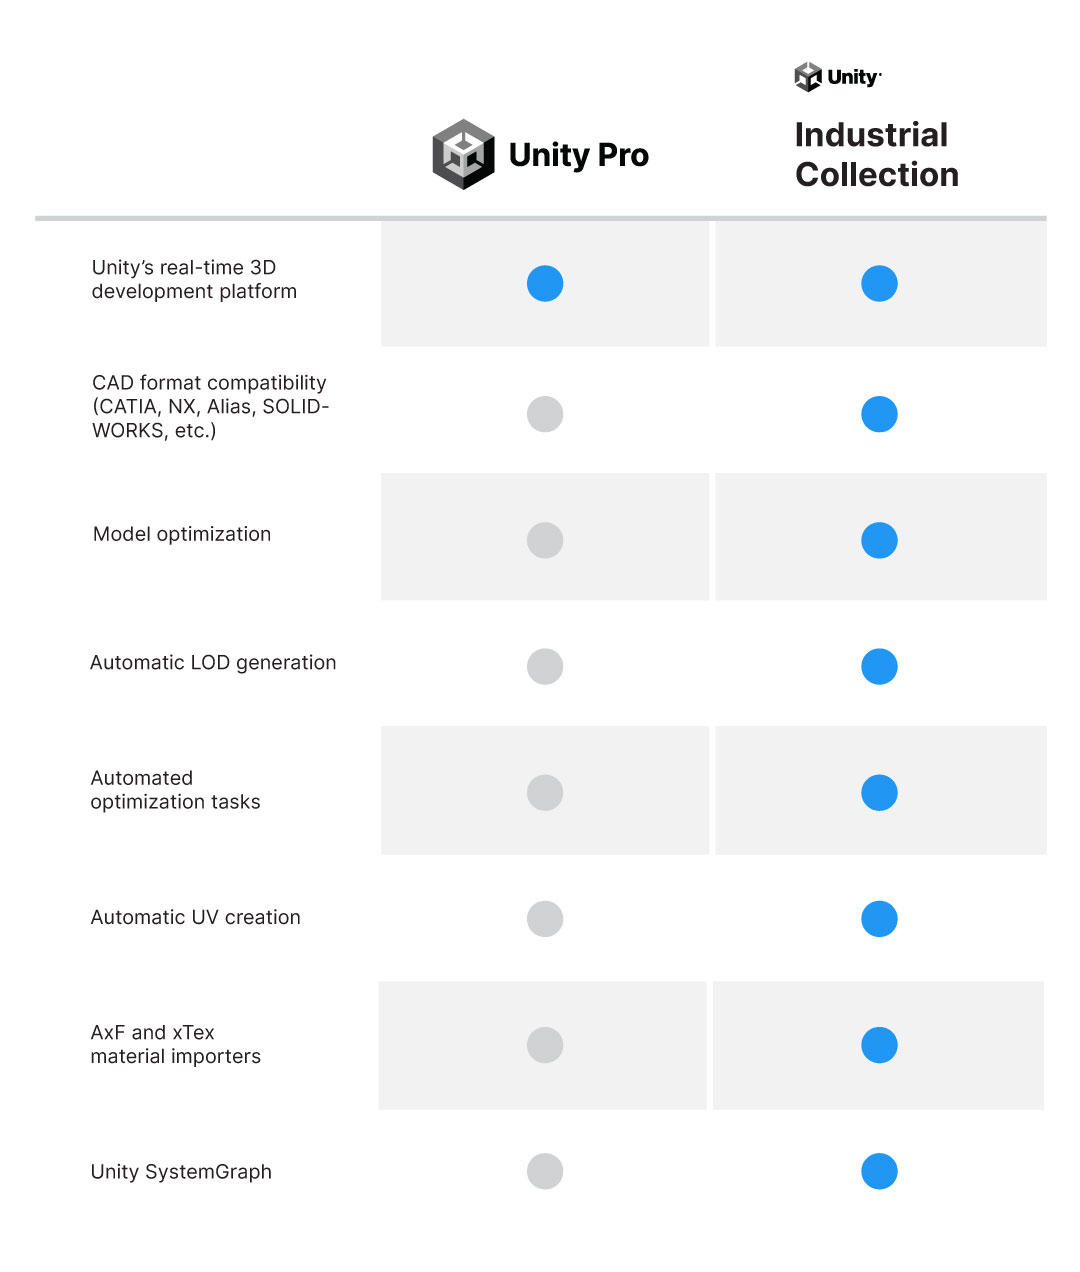 Unity Pro vs UIC comparison chart